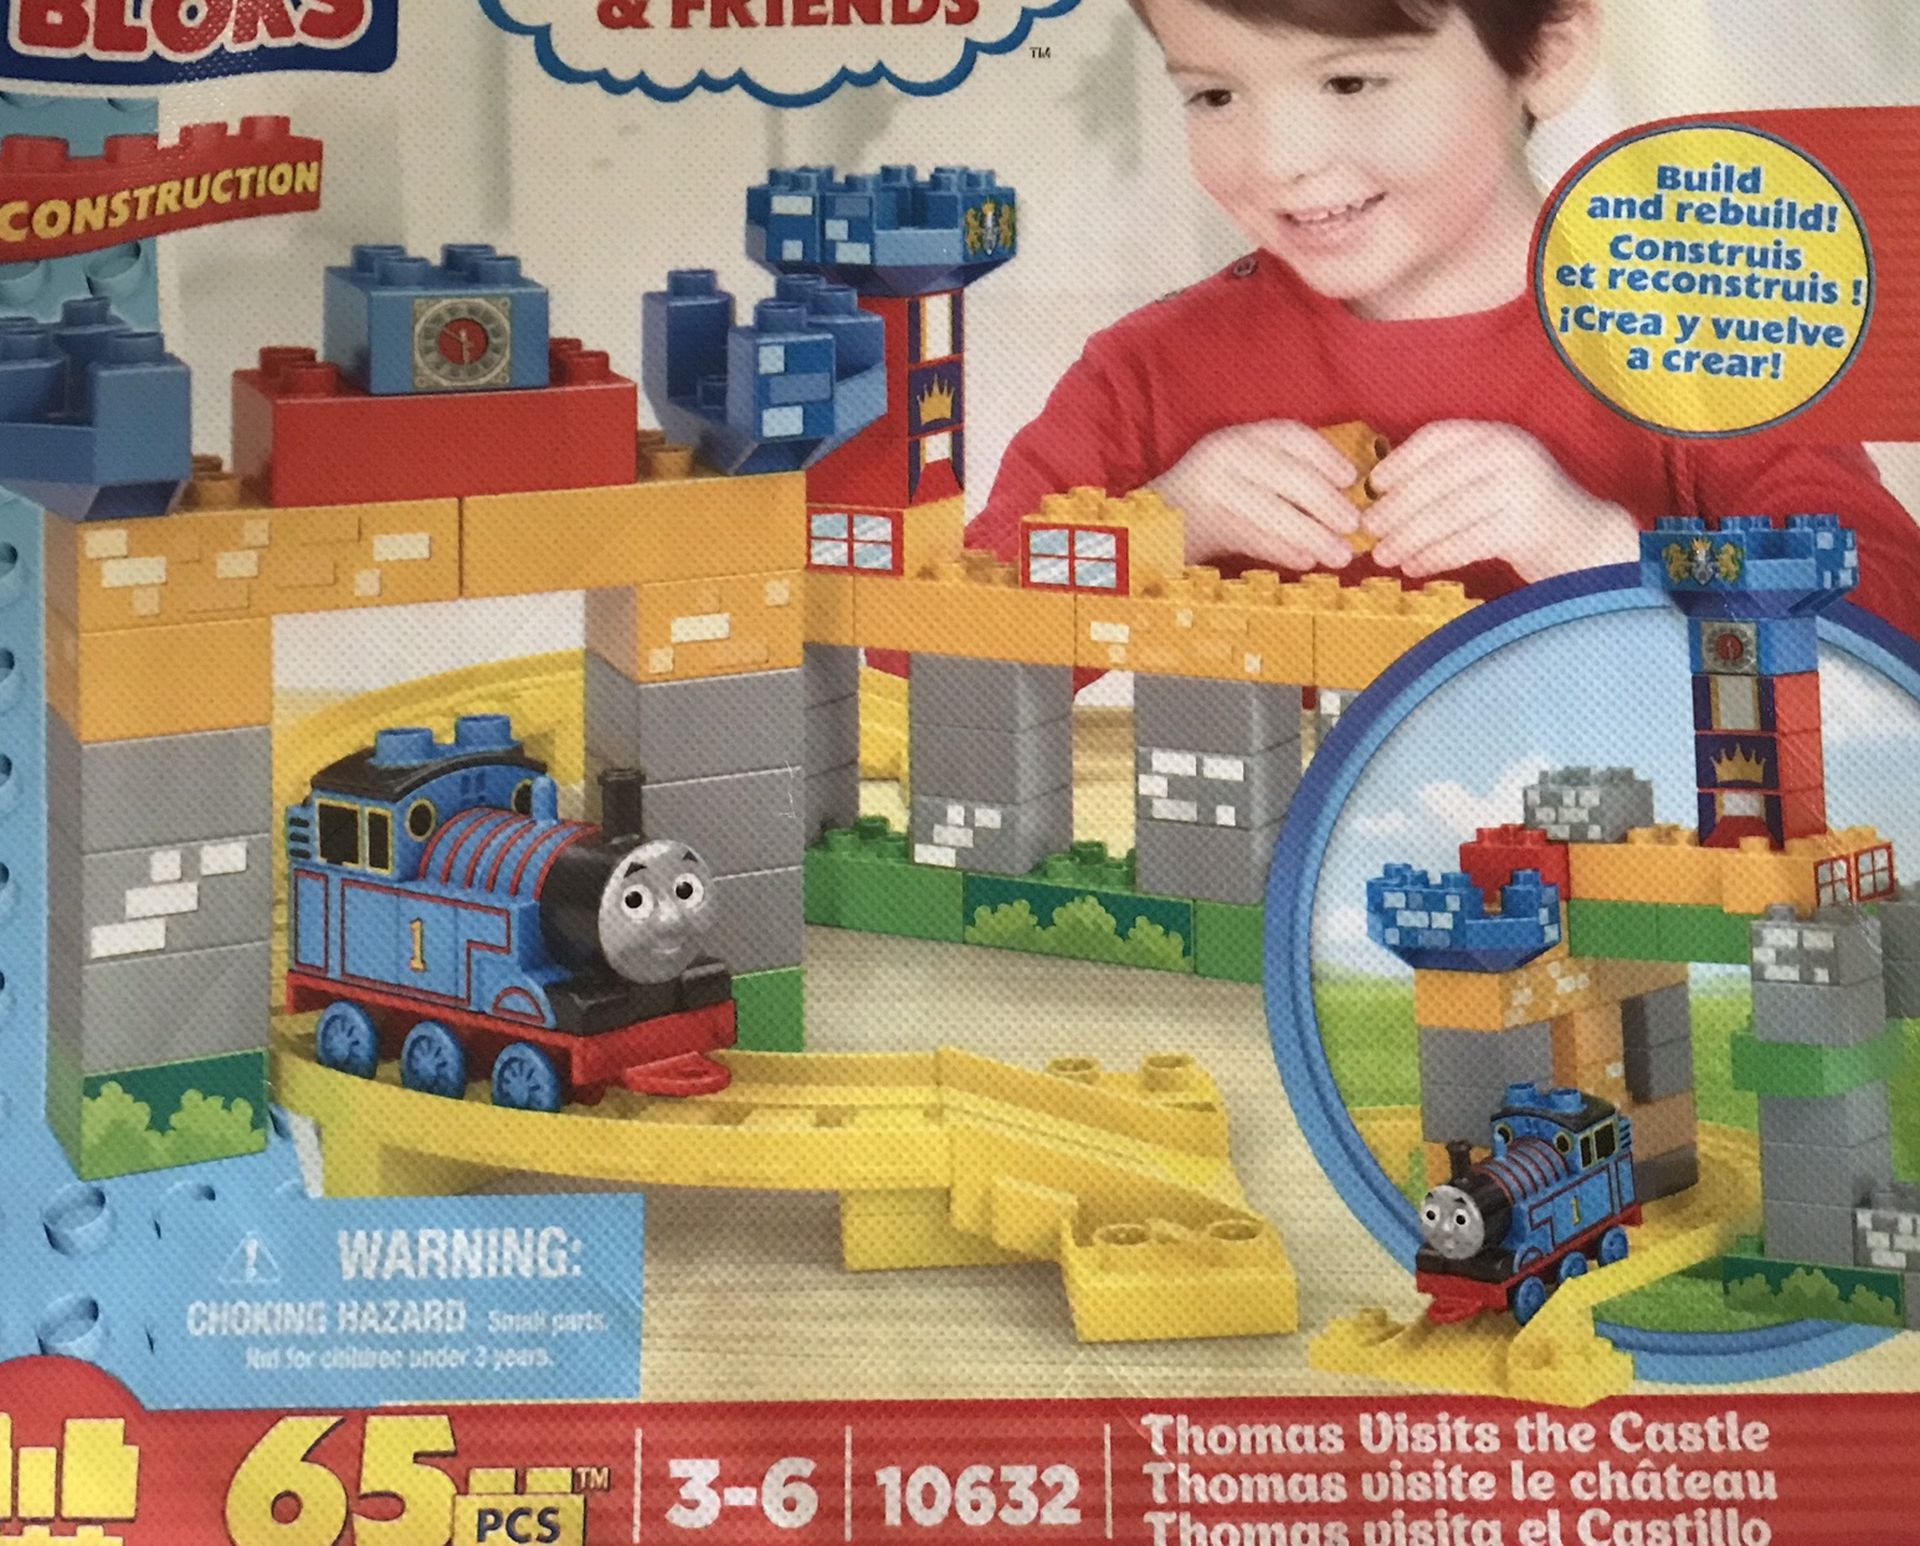 Thomas & Friends Mega Bloks